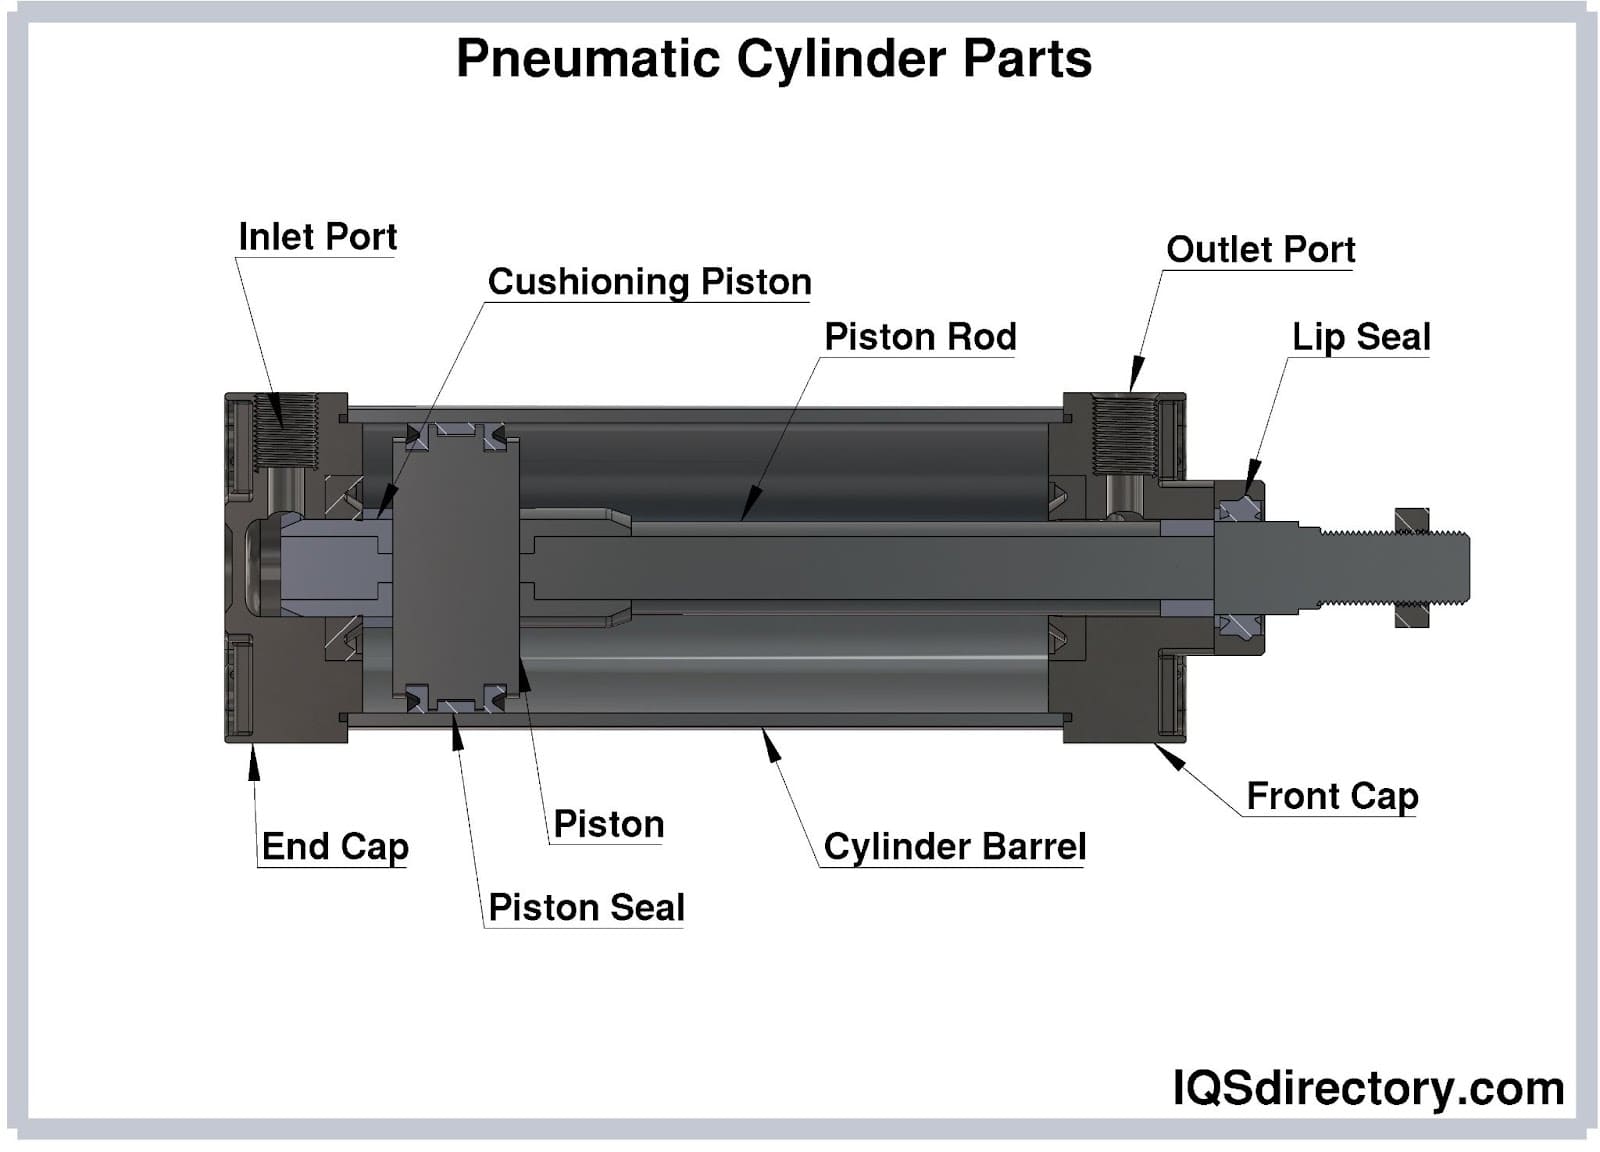 Pneumatic Cylinder Parts